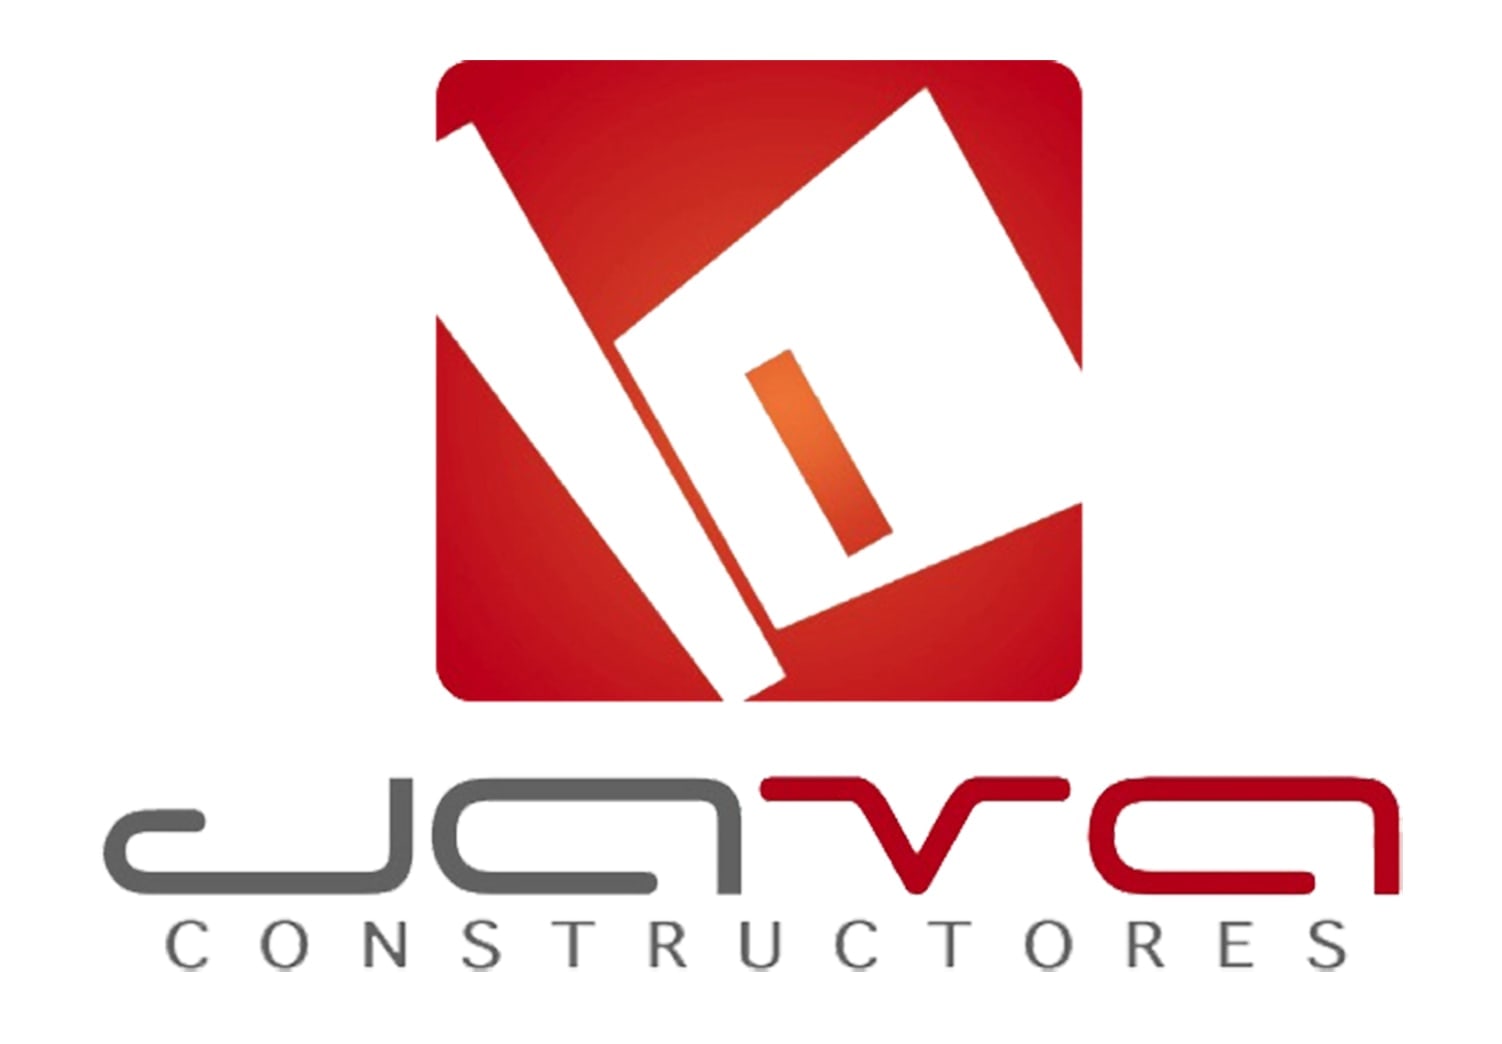 Java Constructores